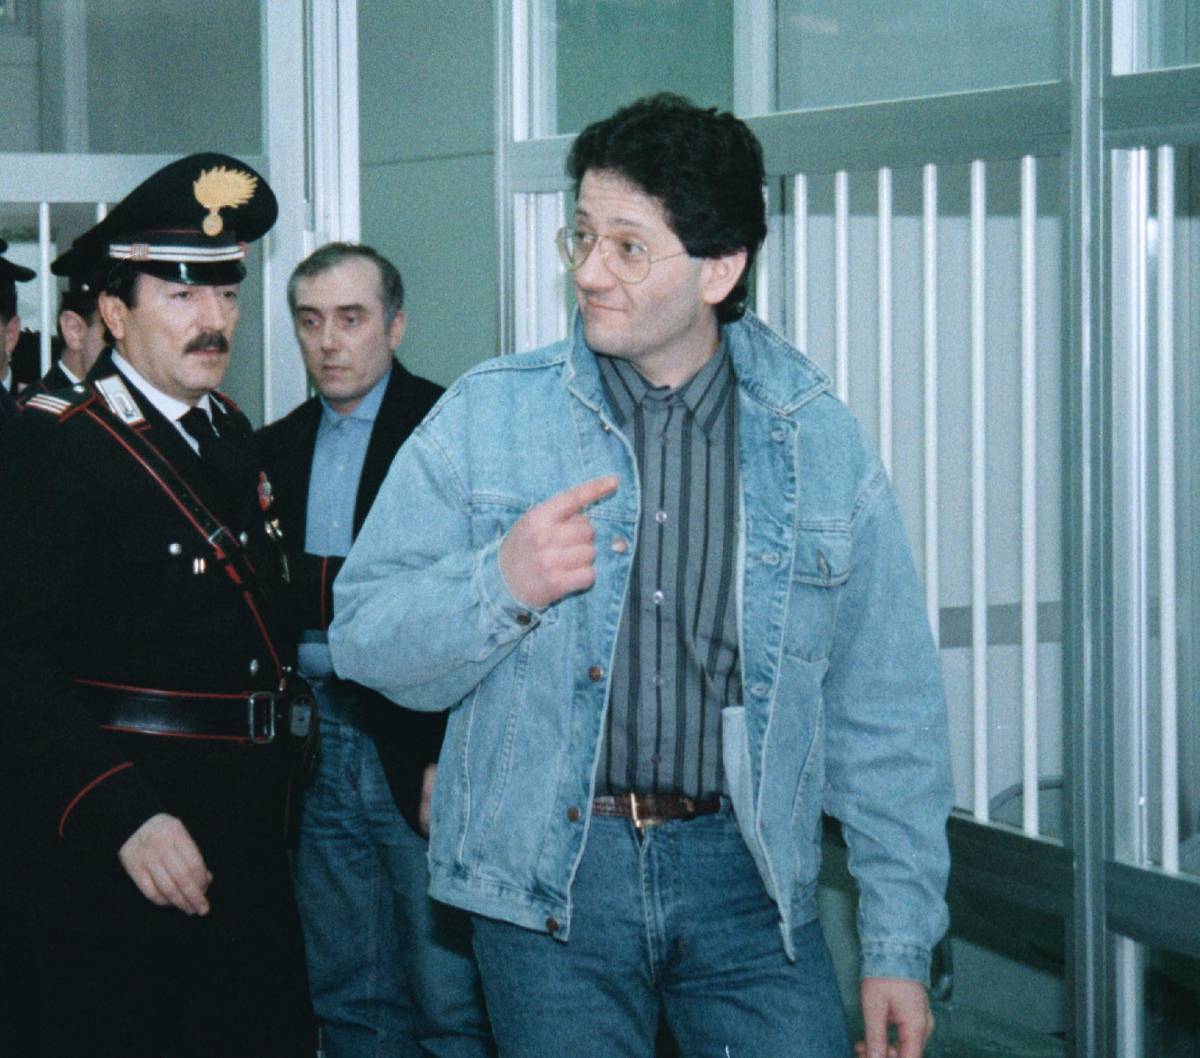 Roberto e Fabio Savi scortati dai carabinieri in tribunale